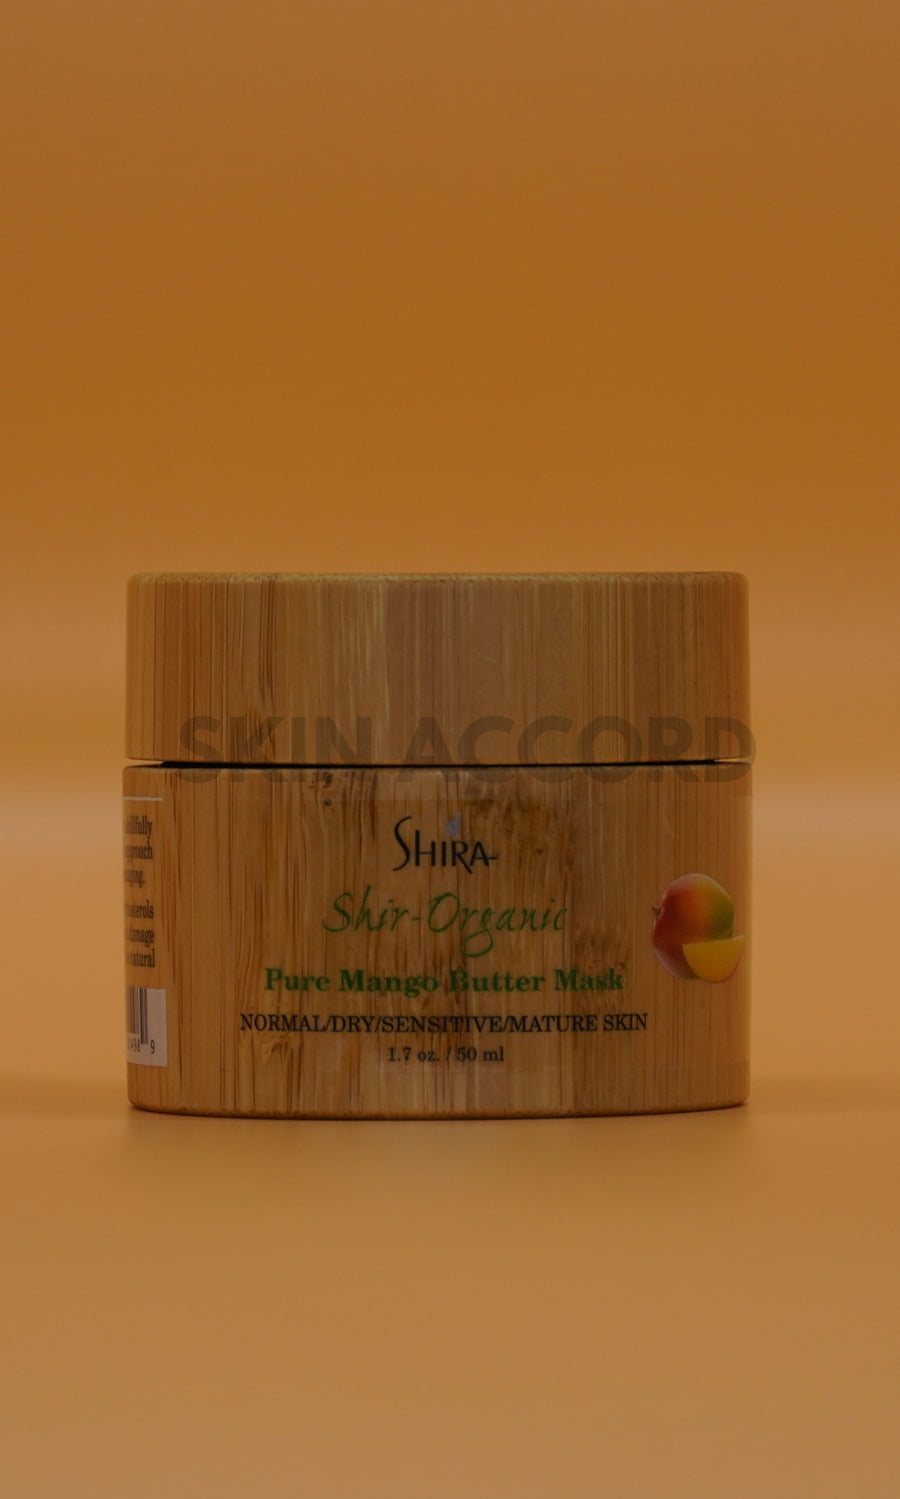 Shir-Organic Pure Mango Butter Mask (Normal, Dry to Mature & Sensitive)